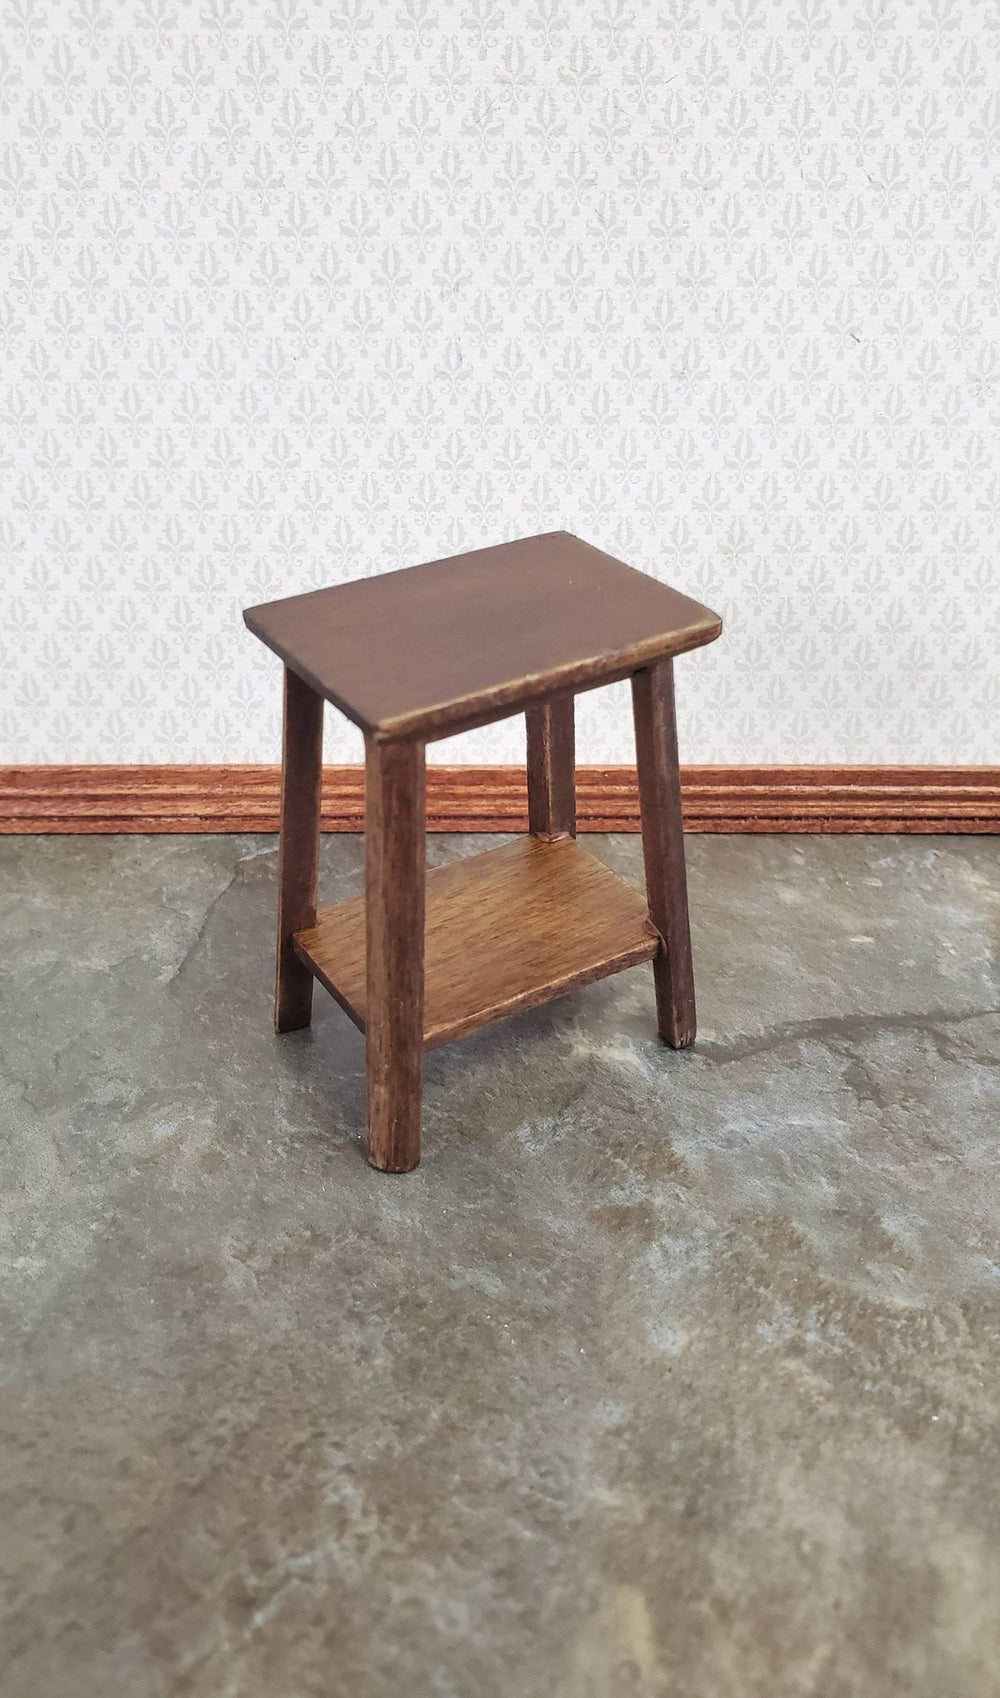 Dollhouse Miniature Fern or Plant Stand Side Table Walnut Finish 1:12 Scale Furniture - Miniature Crush